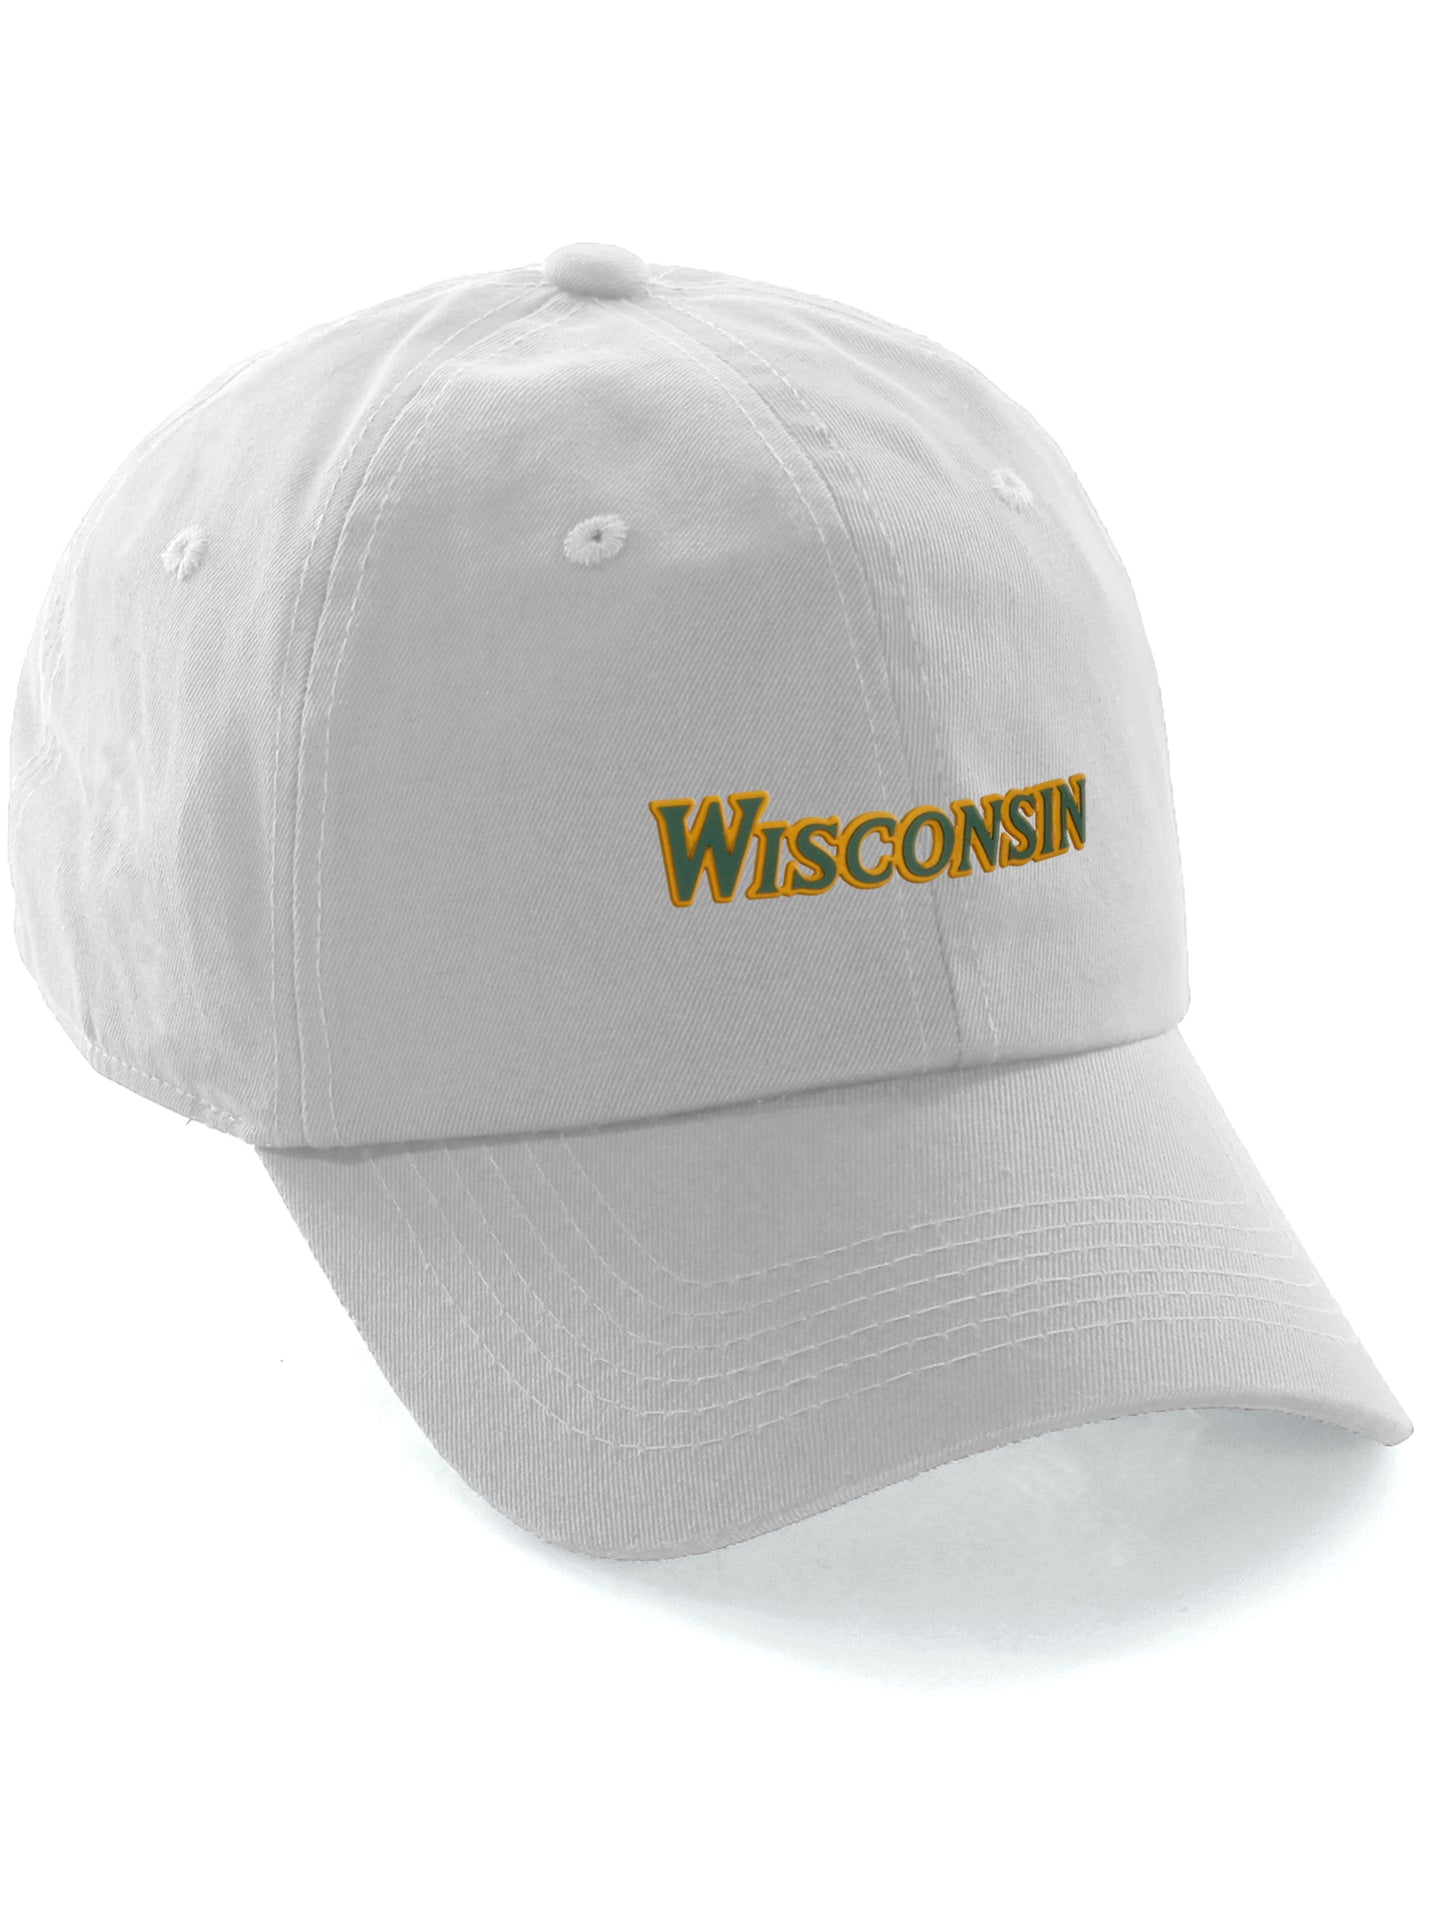 Daxton USA States Golf Dad Hat Cap Cotton Unstructure Low Profile Strapback